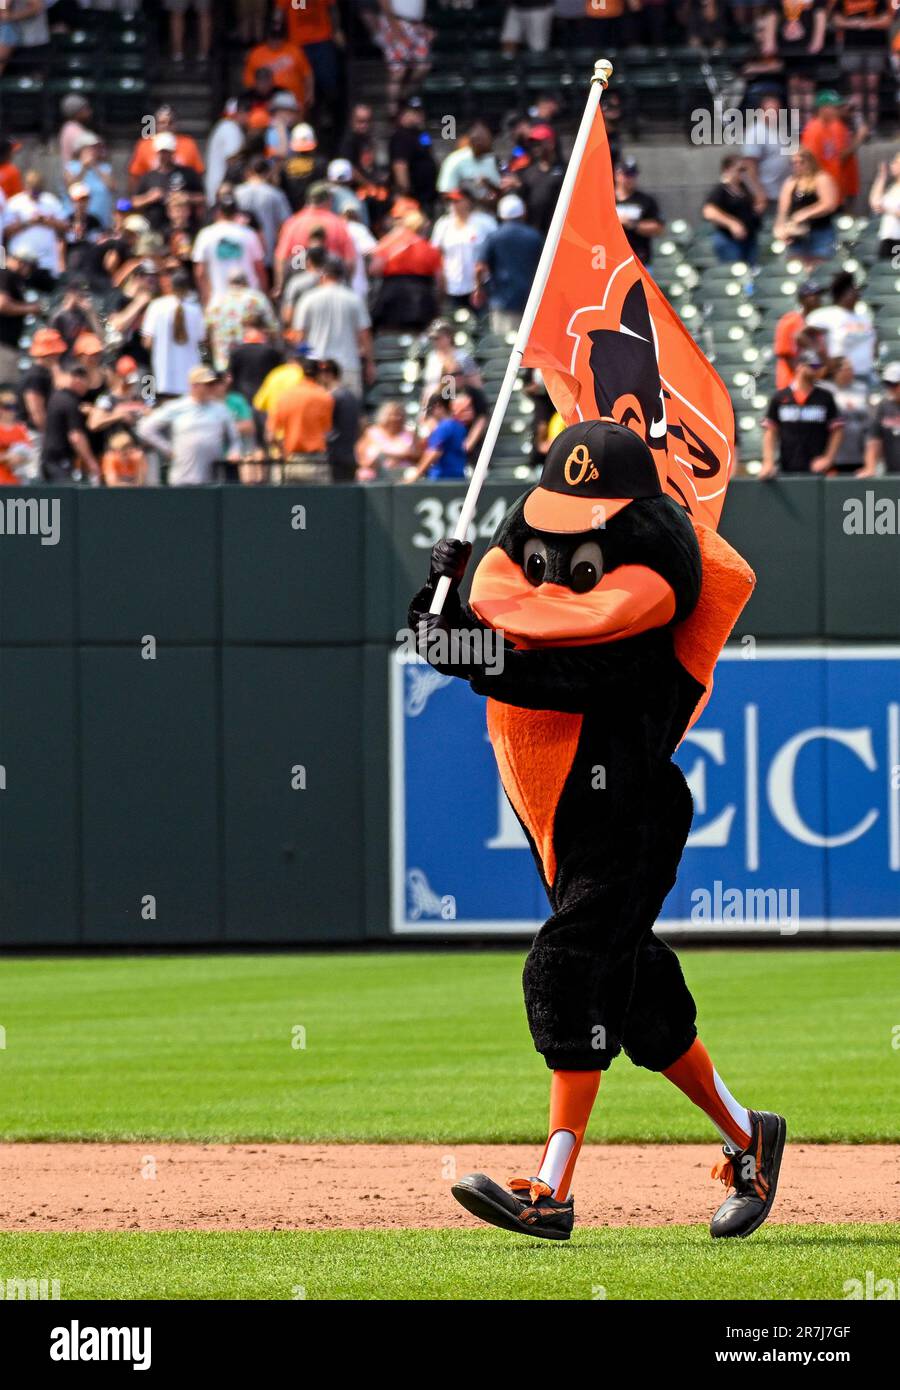 BALTIMORE, MD - June 15: The Orioles Bird celebrates a series win